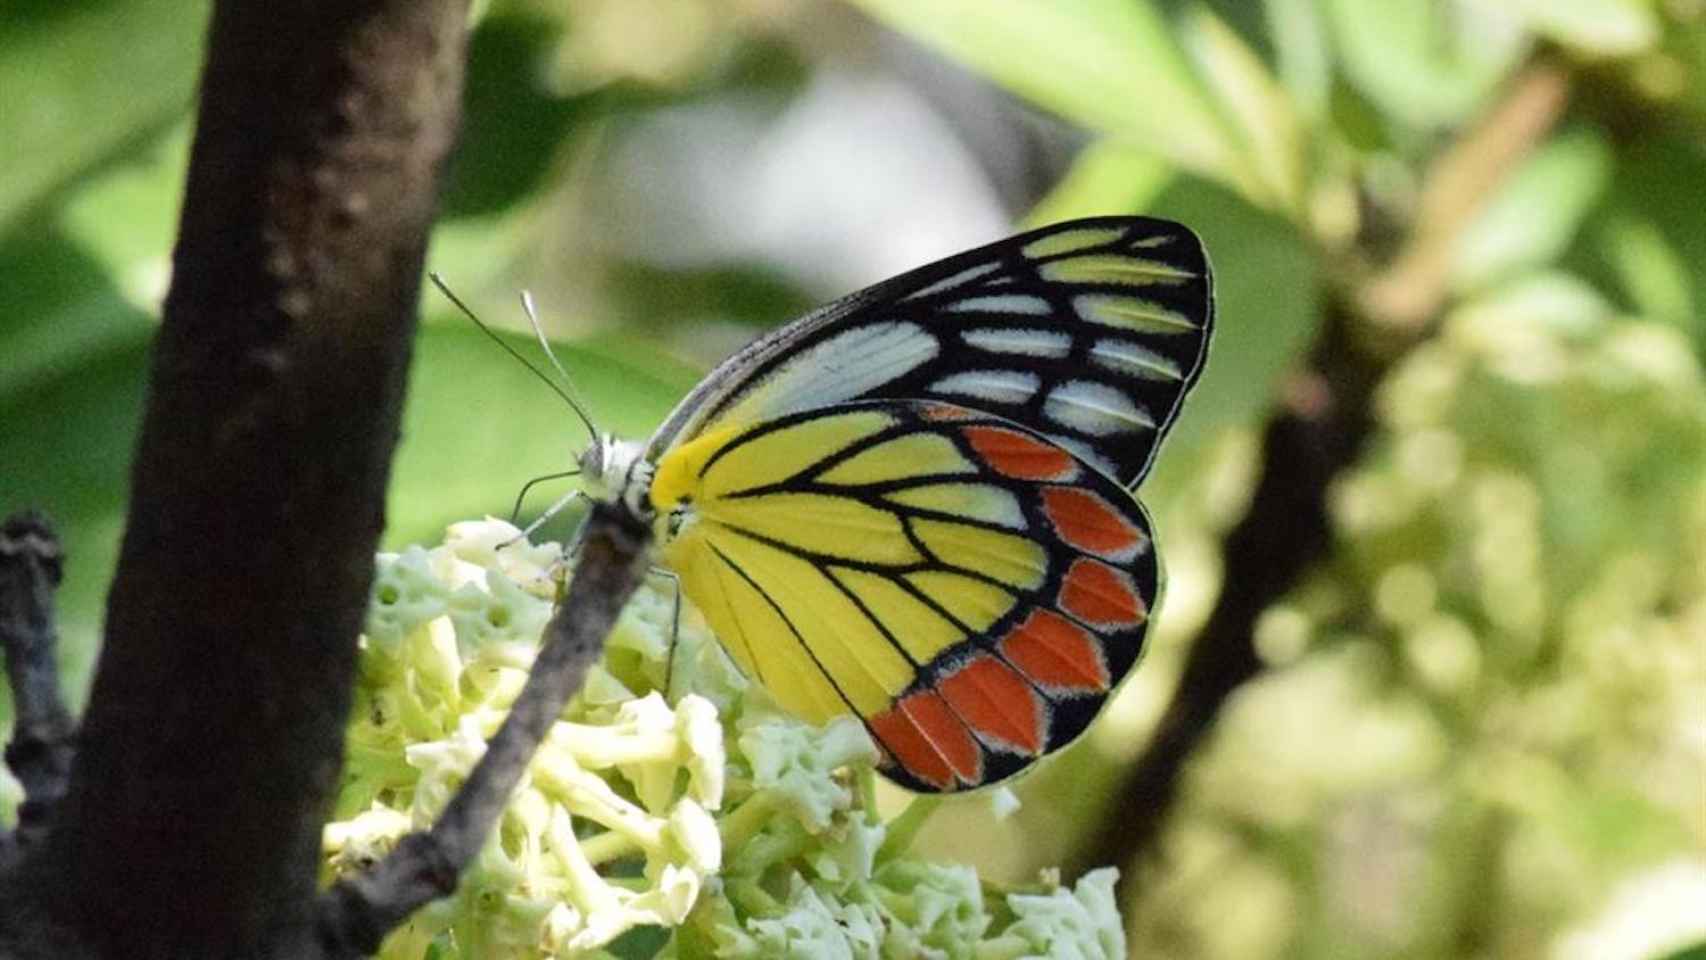 Una mariposa se posa sobre una planta / EUROPA PRESS